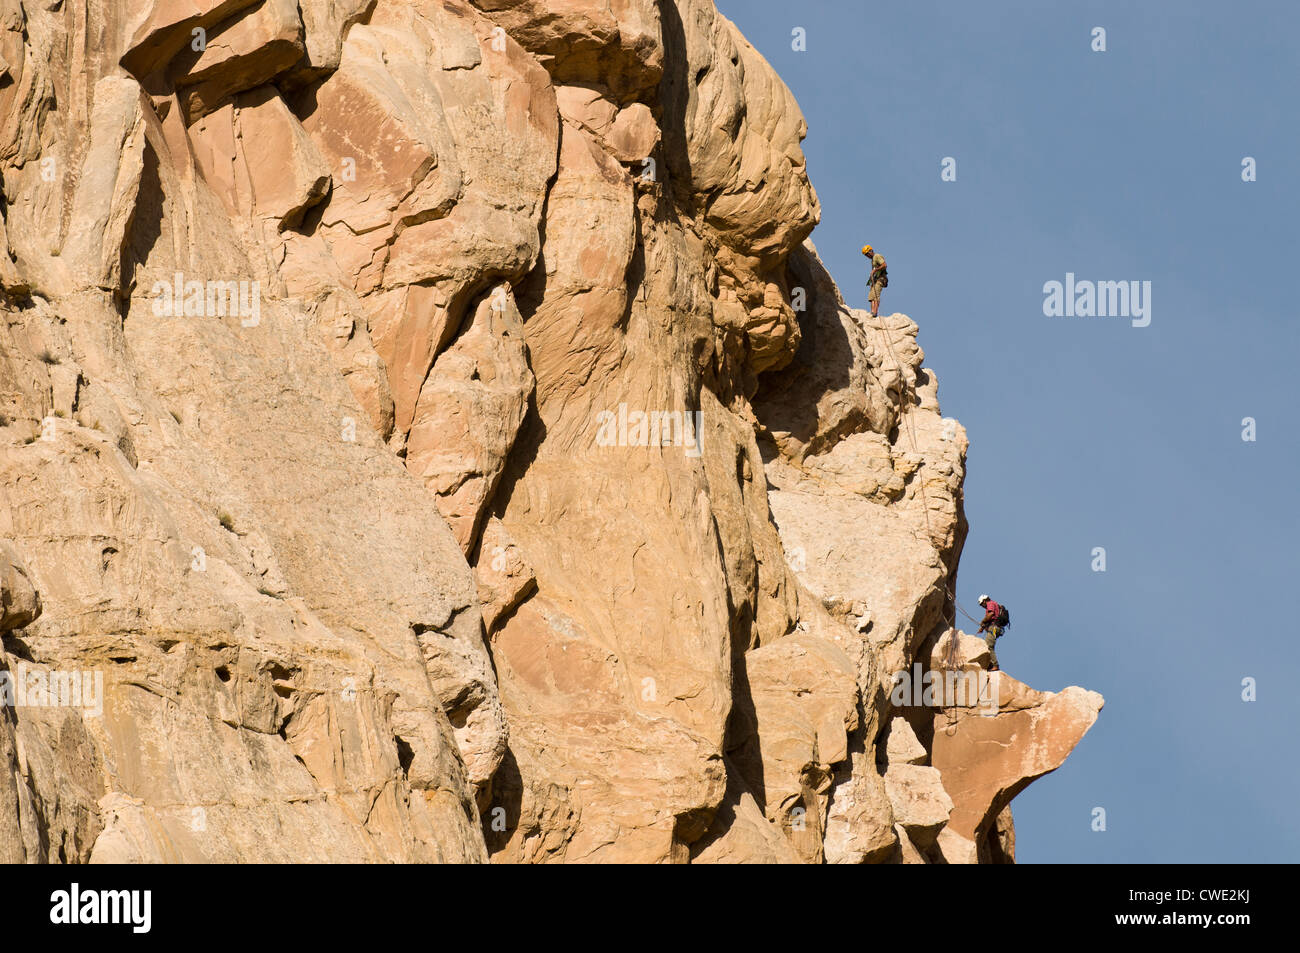 Two men rock climbing a sandstone prow in the San Rafael Swell, Green River, Utah. Stock Photo